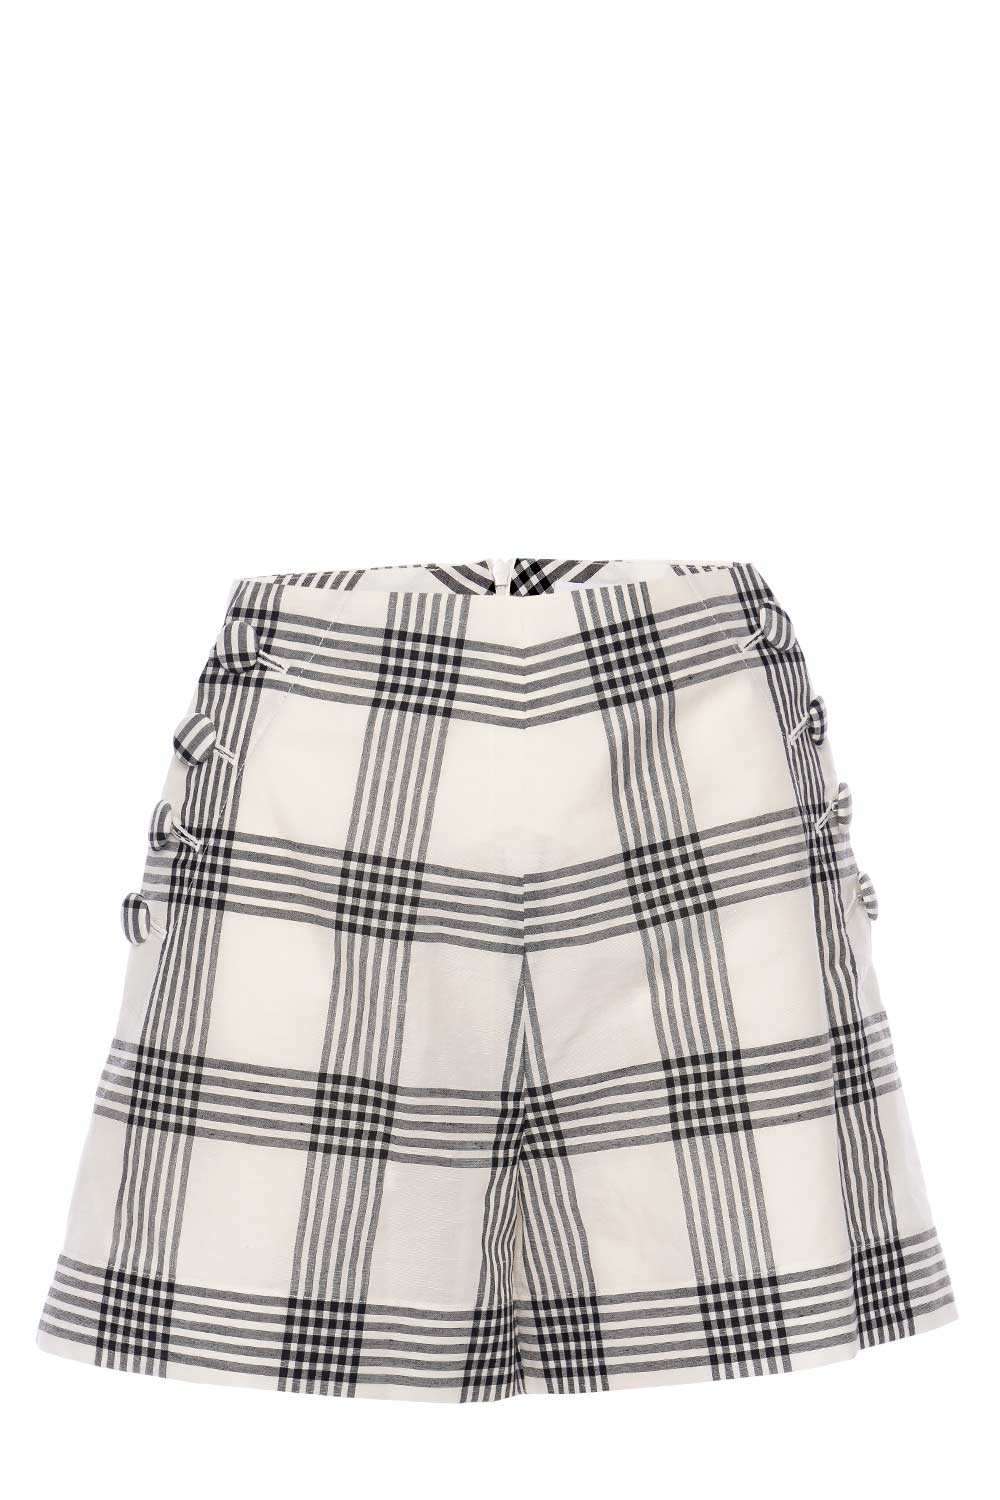 Lisa Marie Fernandez Sailor Black & White Cotton Linen Shorts